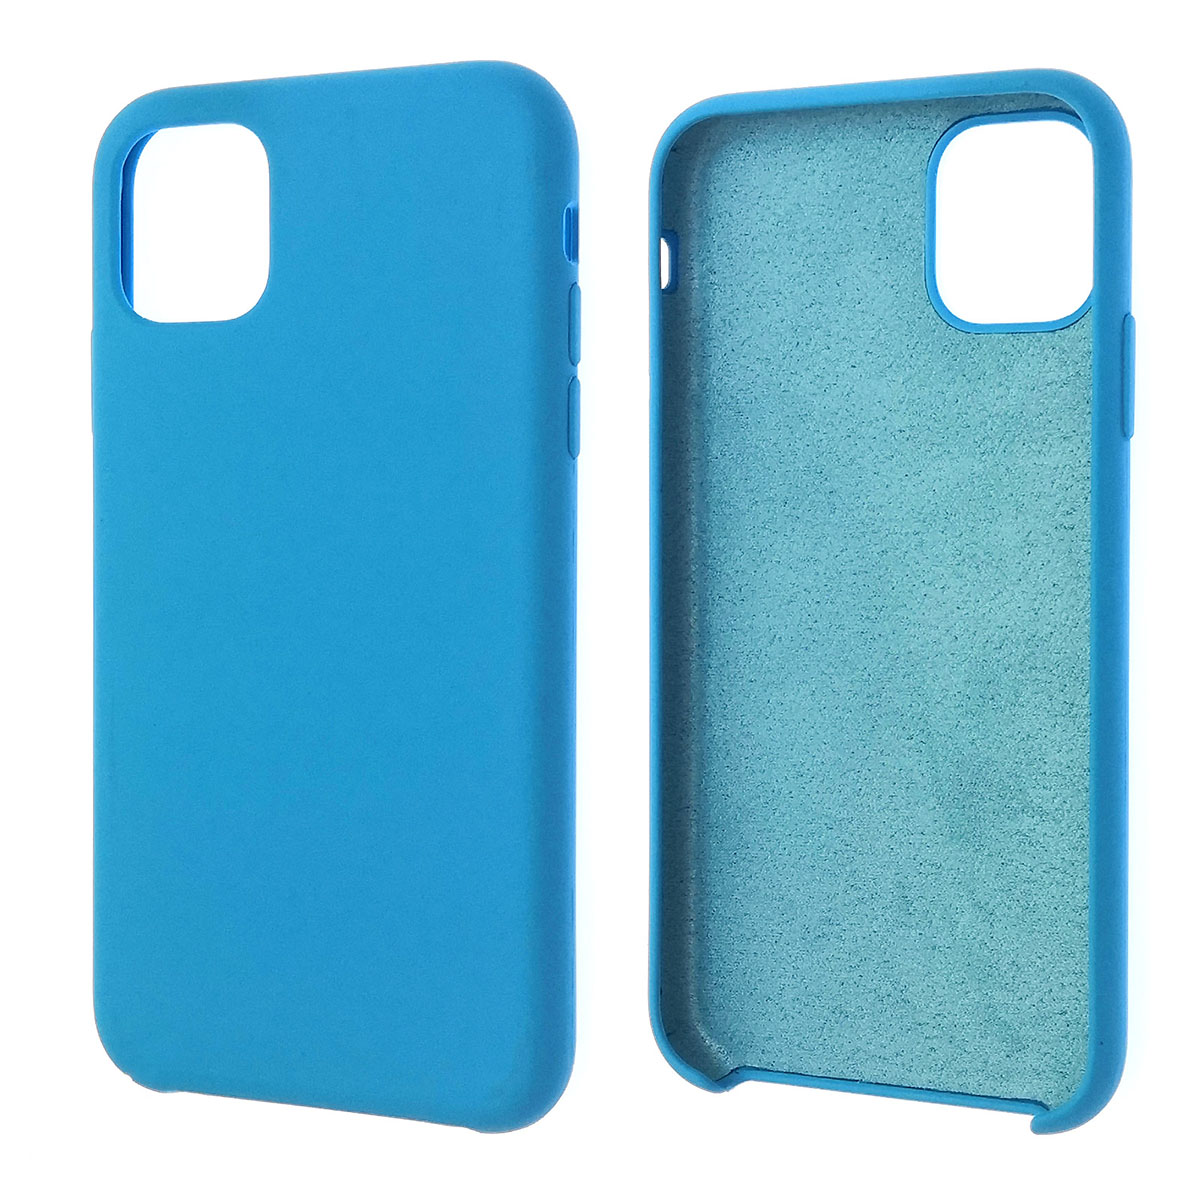 Чехол накладка Silicon Case для APPLE iPhone 11, силикон, бархат, цвет ярко голубой